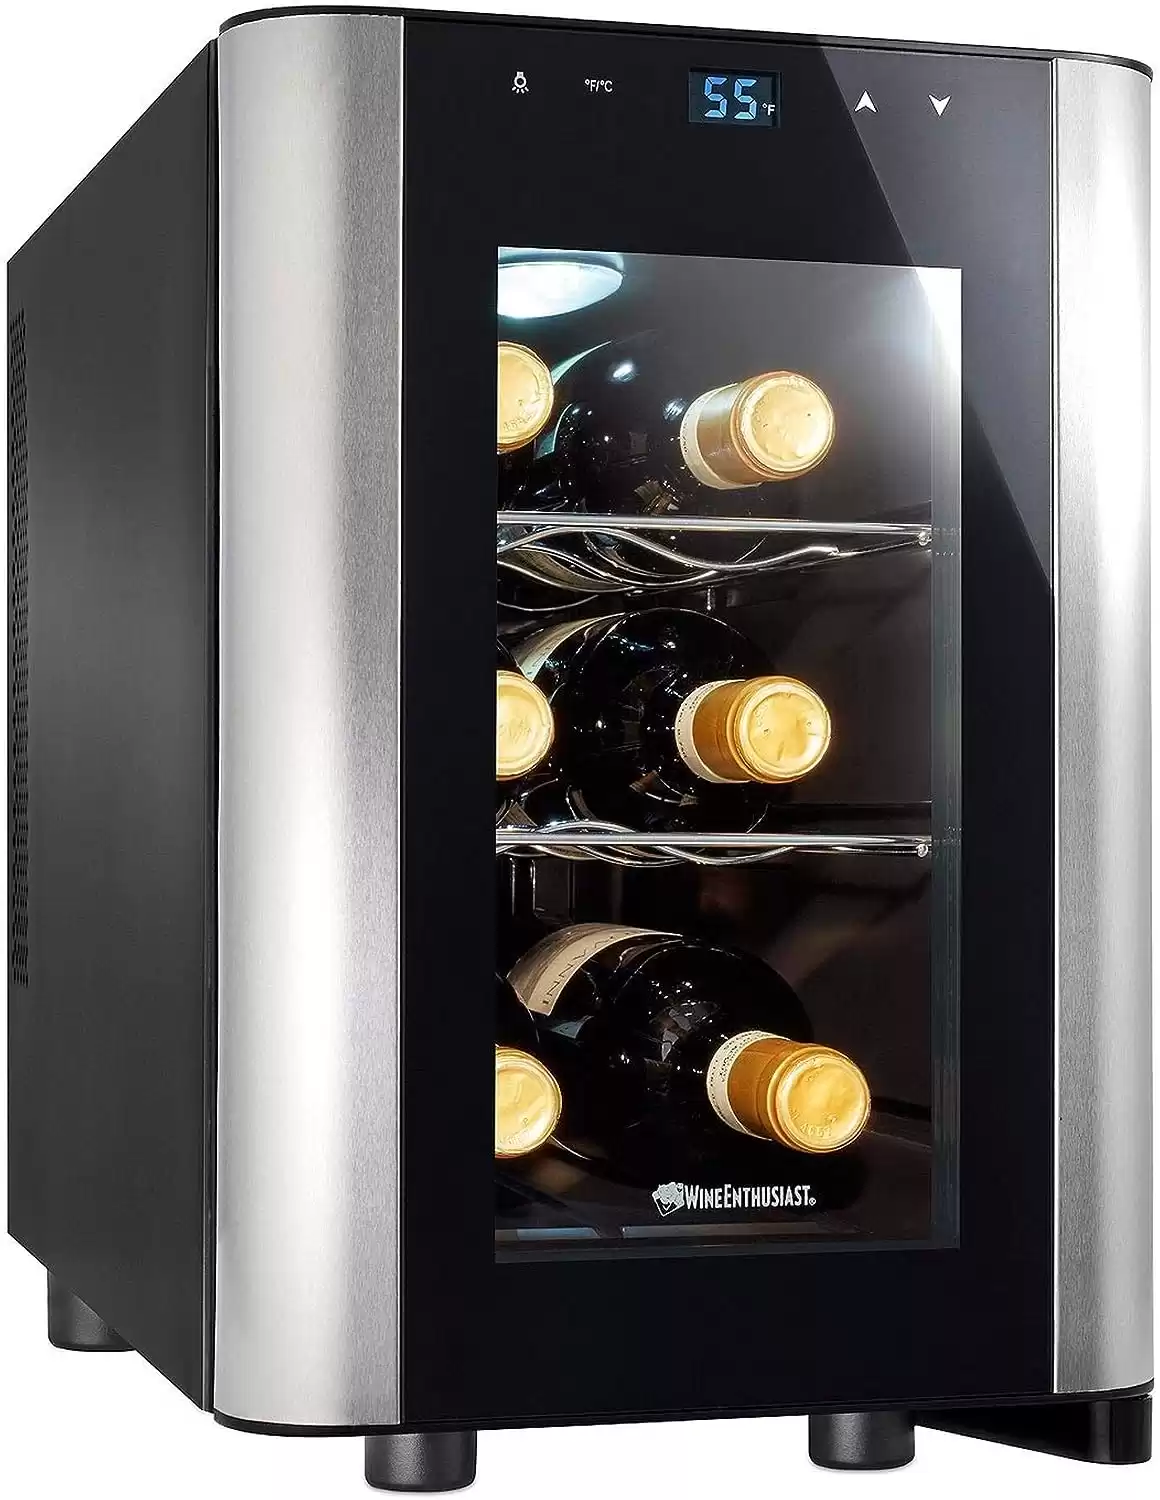 Wine Enthusiast 6 Bottle Countertop Wine Cooler – Mini Fridge for Kitchen